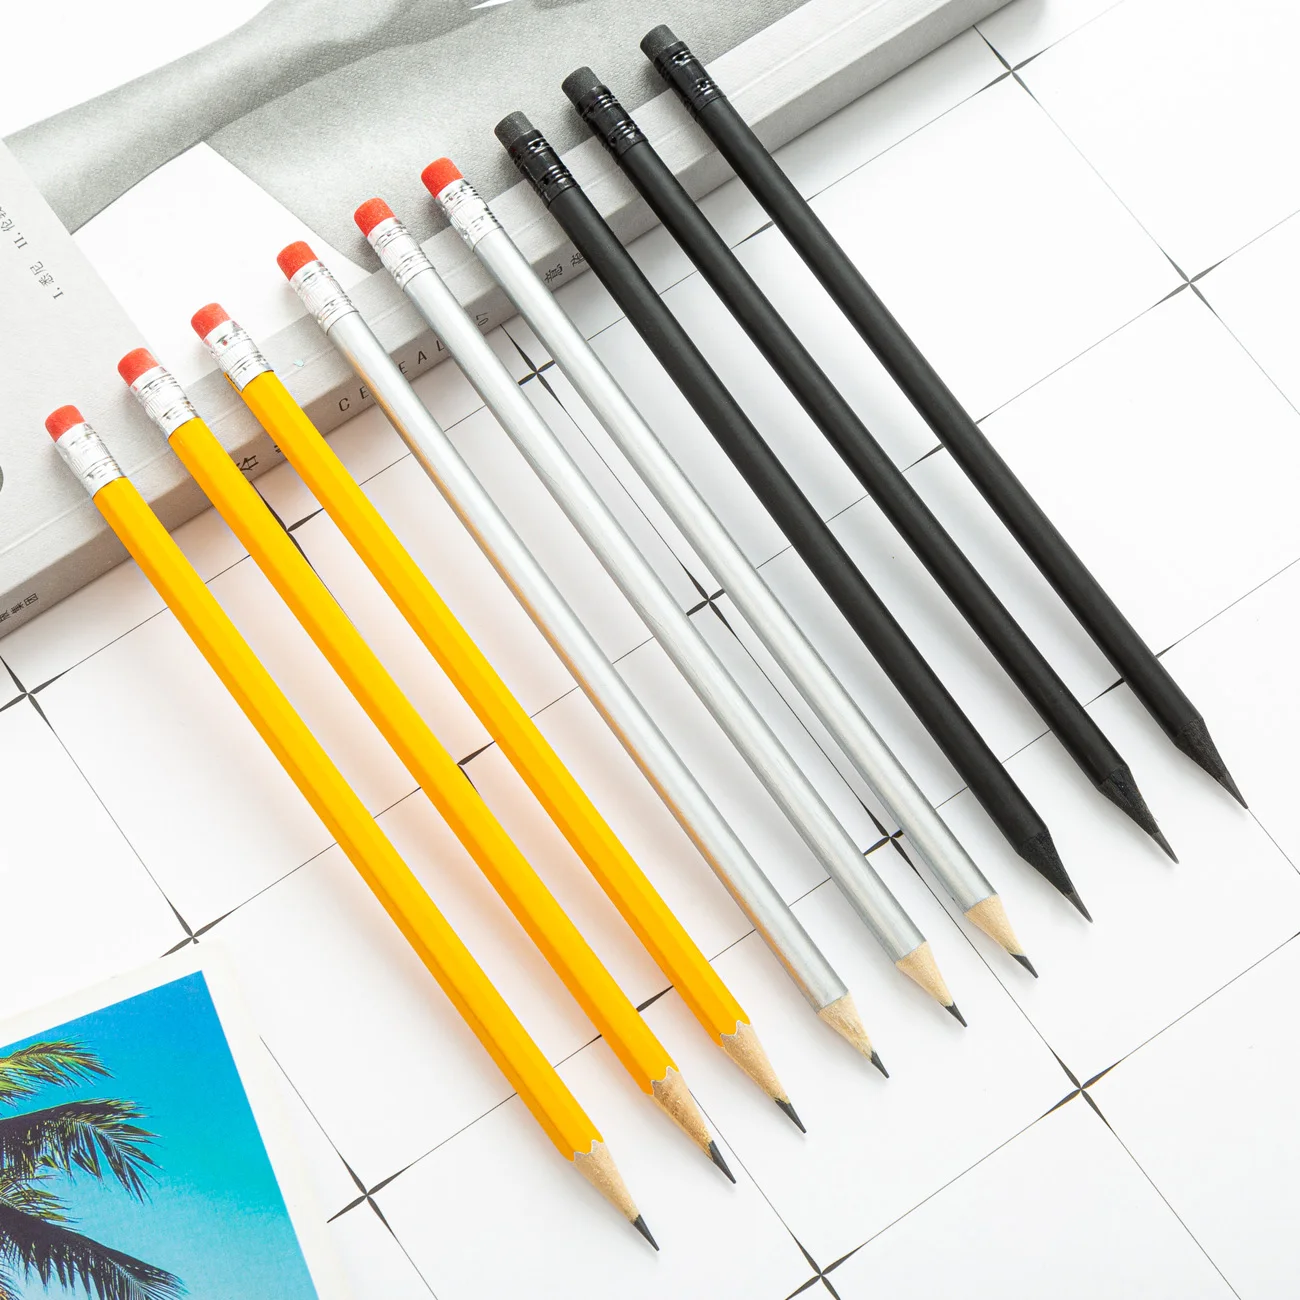 
Promotion Custom logo printed Black wooden Multi-color pencil HB Pencil with Eraser 